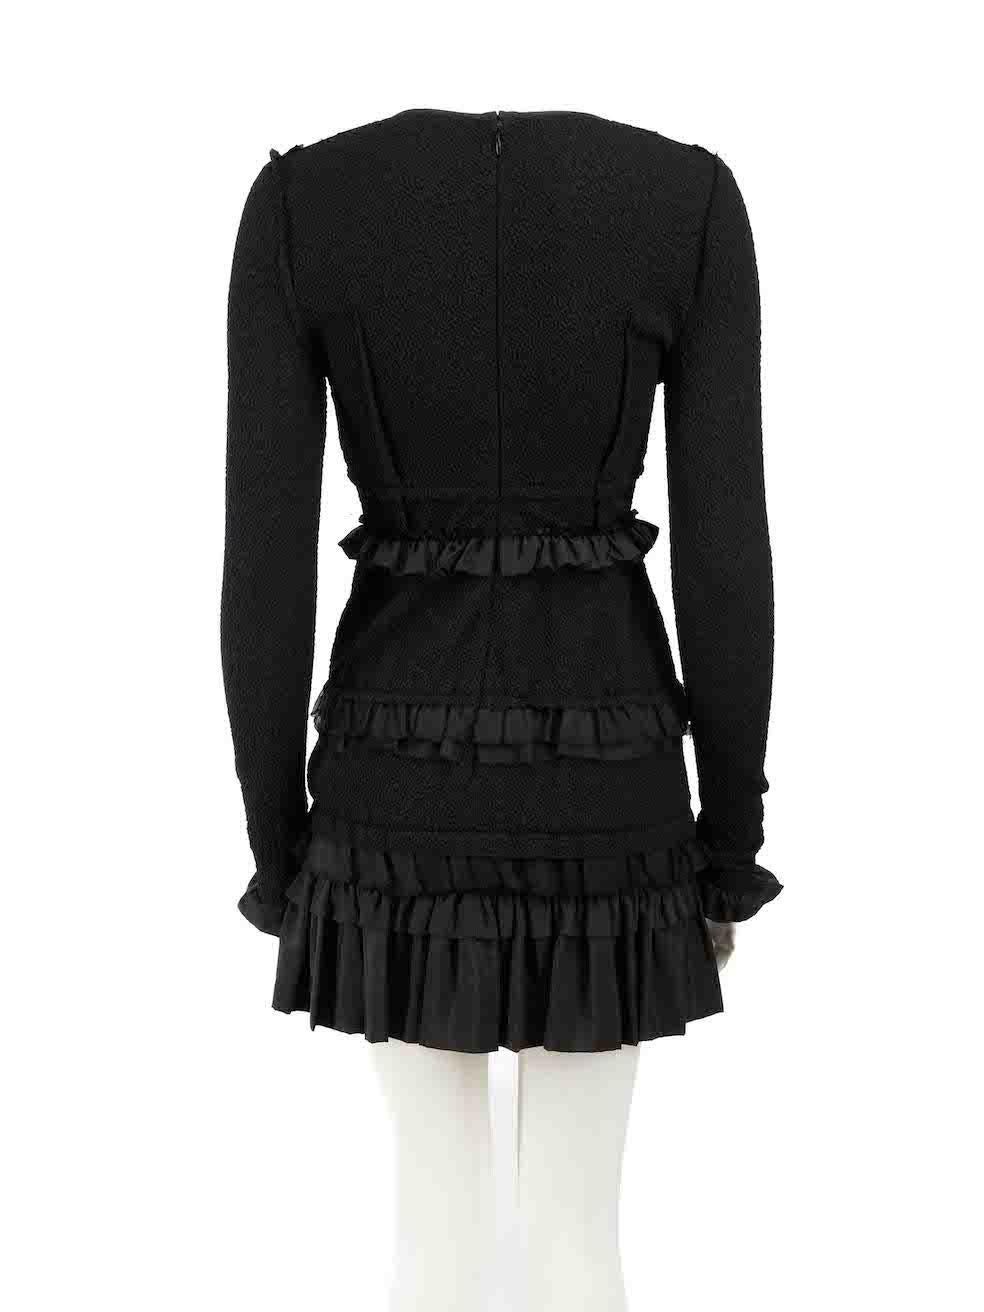 Nina Ricci Black Ruffle Trim Mini Dress Size S In Good Condition For Sale In London, GB